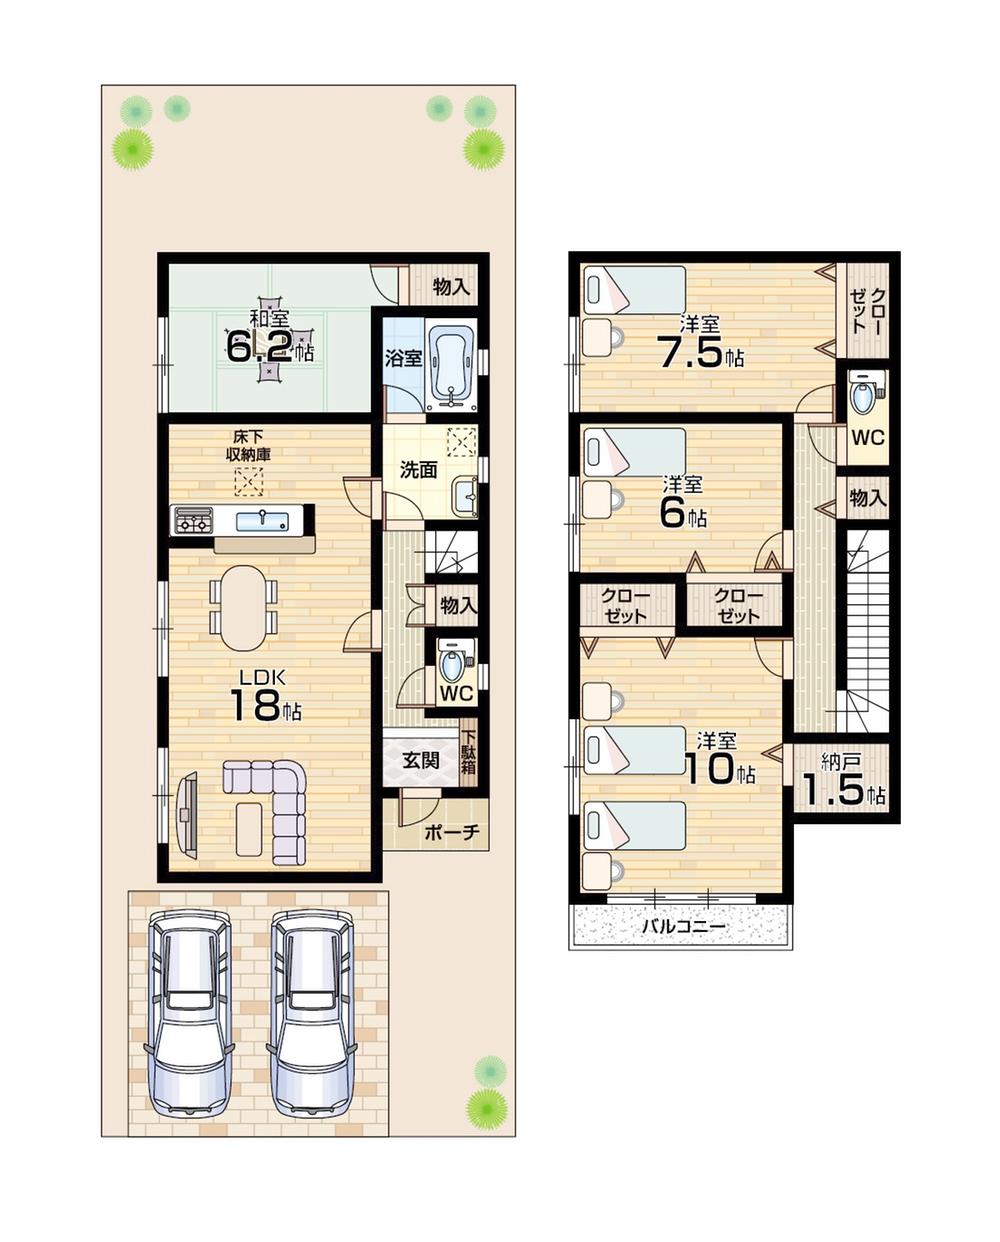 Floor plan. 16 million yen, 4LDK + S (storeroom), Land area 183.96 sq m , Building area 109.35 sq m